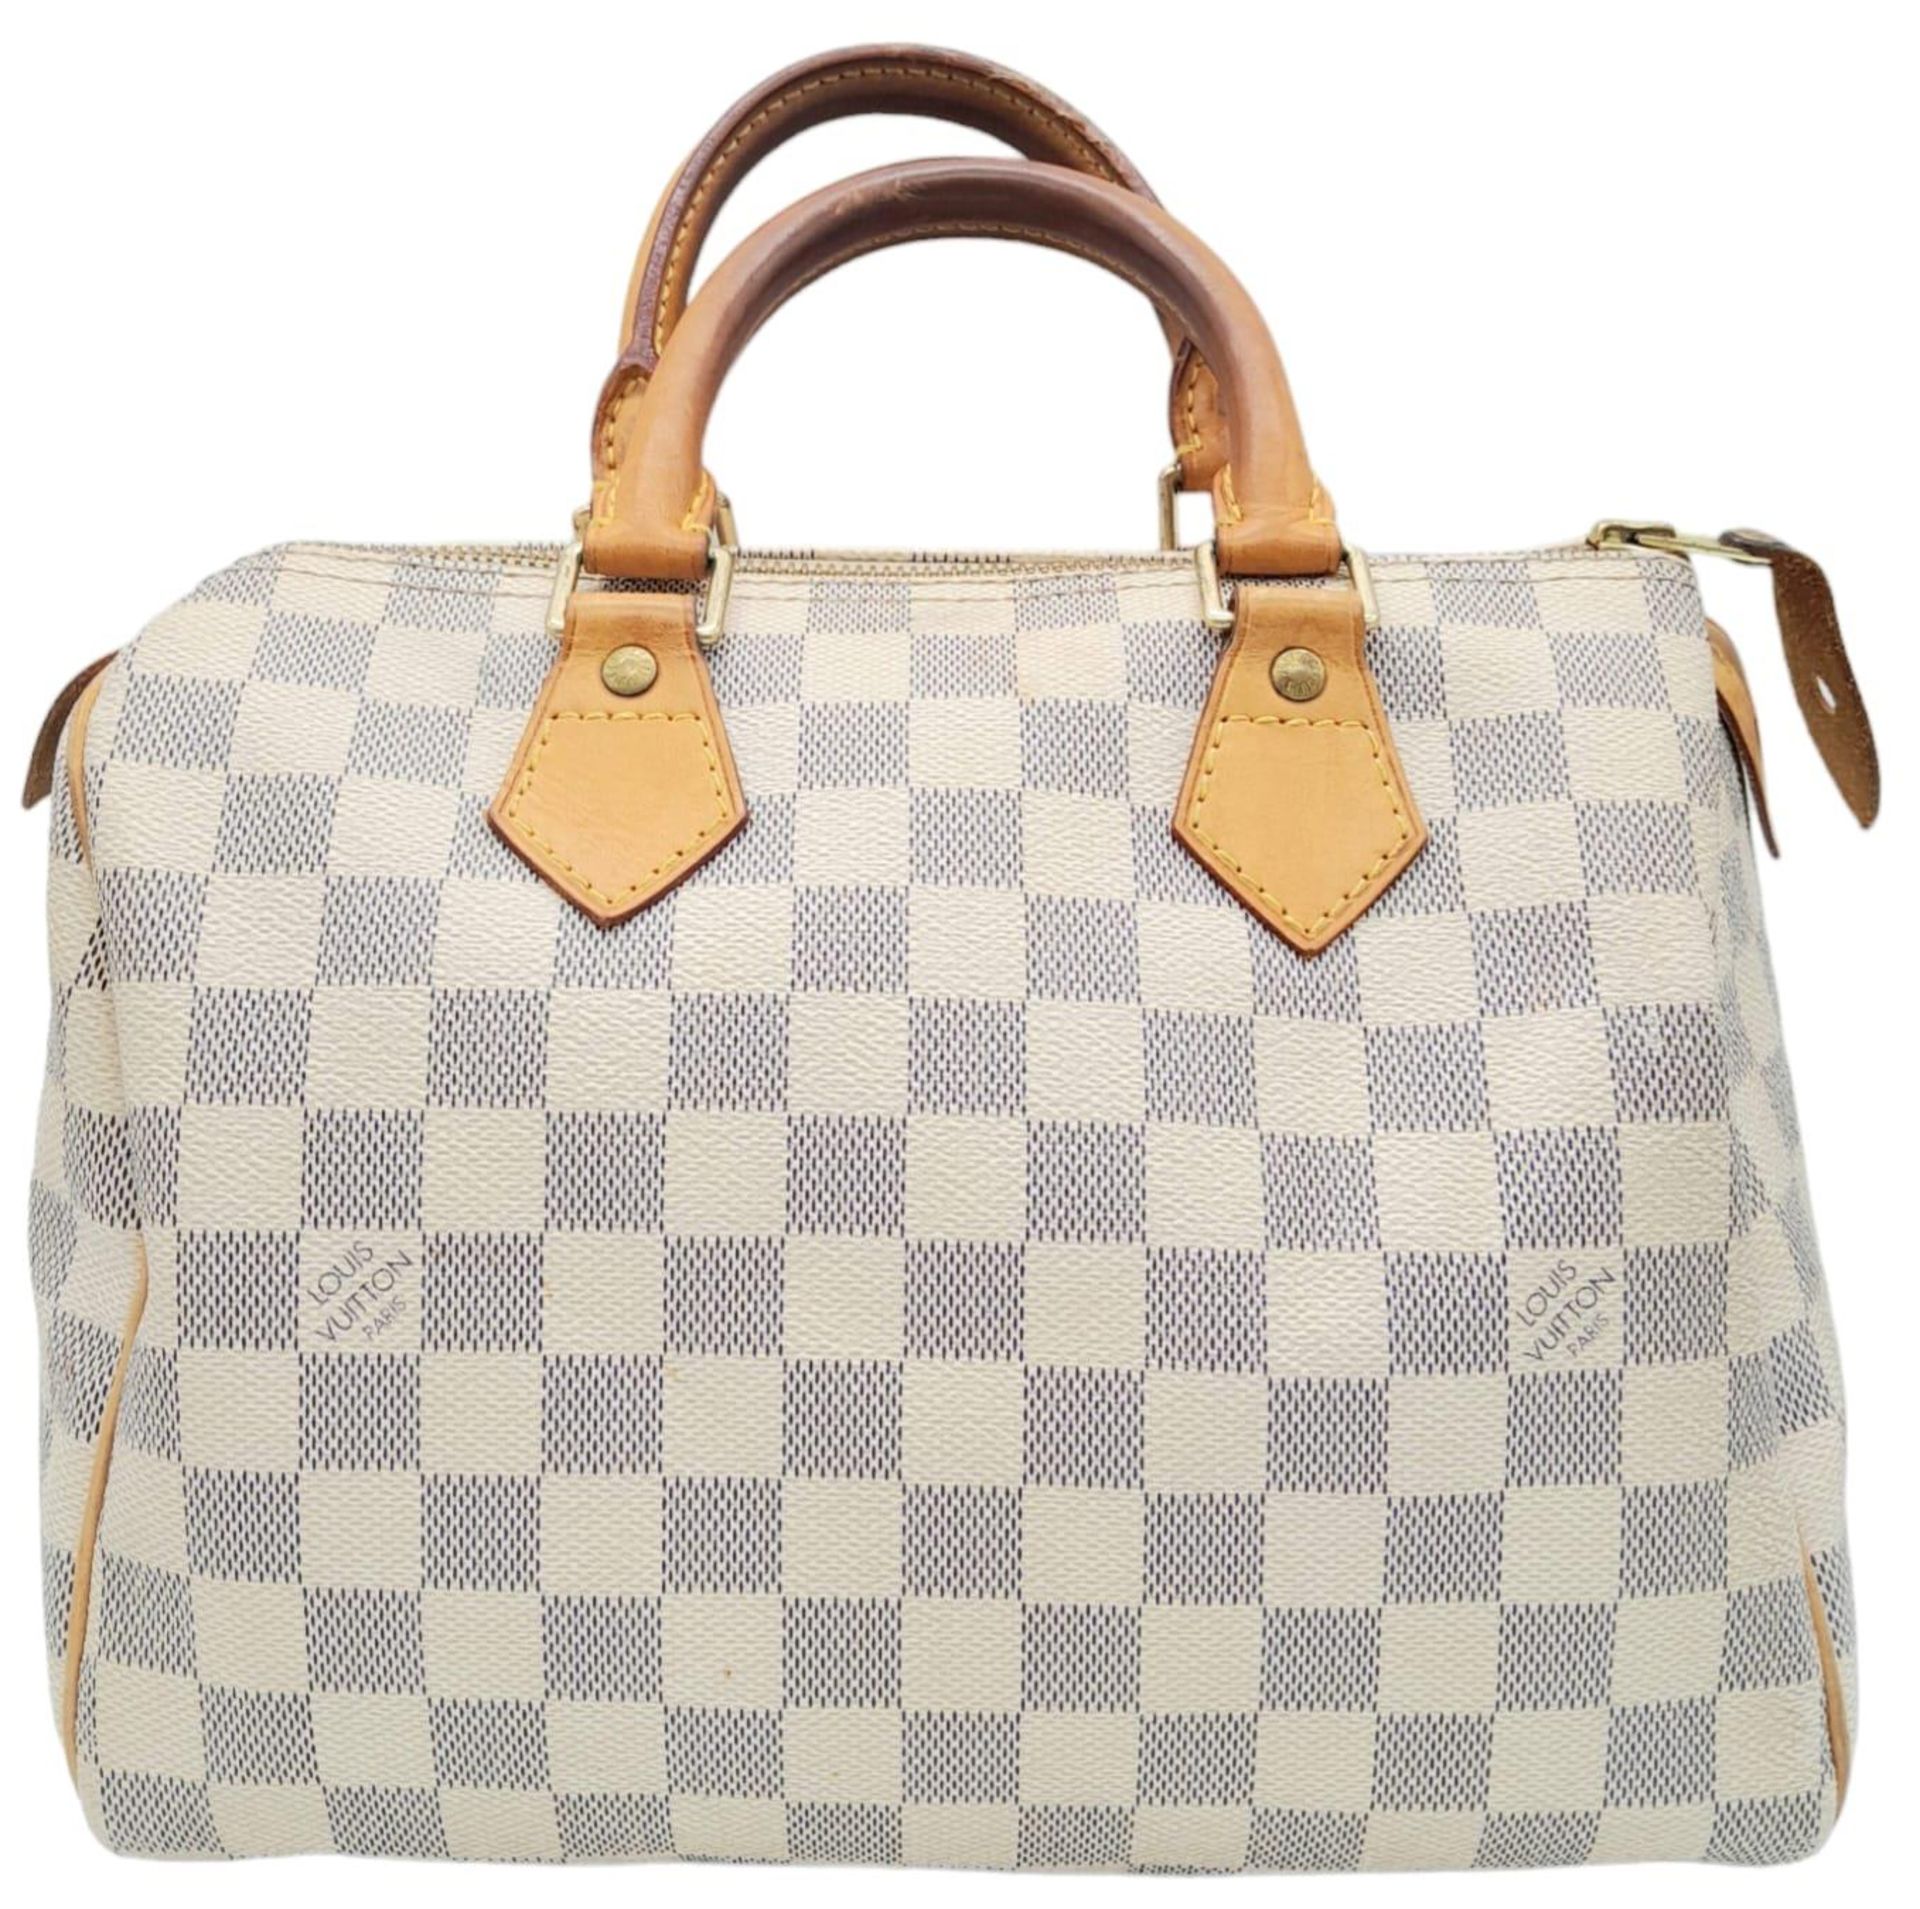 A Louis Vuitton White Canvas Damier Azur Speedy Handbag. Leather exterior, Rolled leather handles, a - Bild 2 aus 7